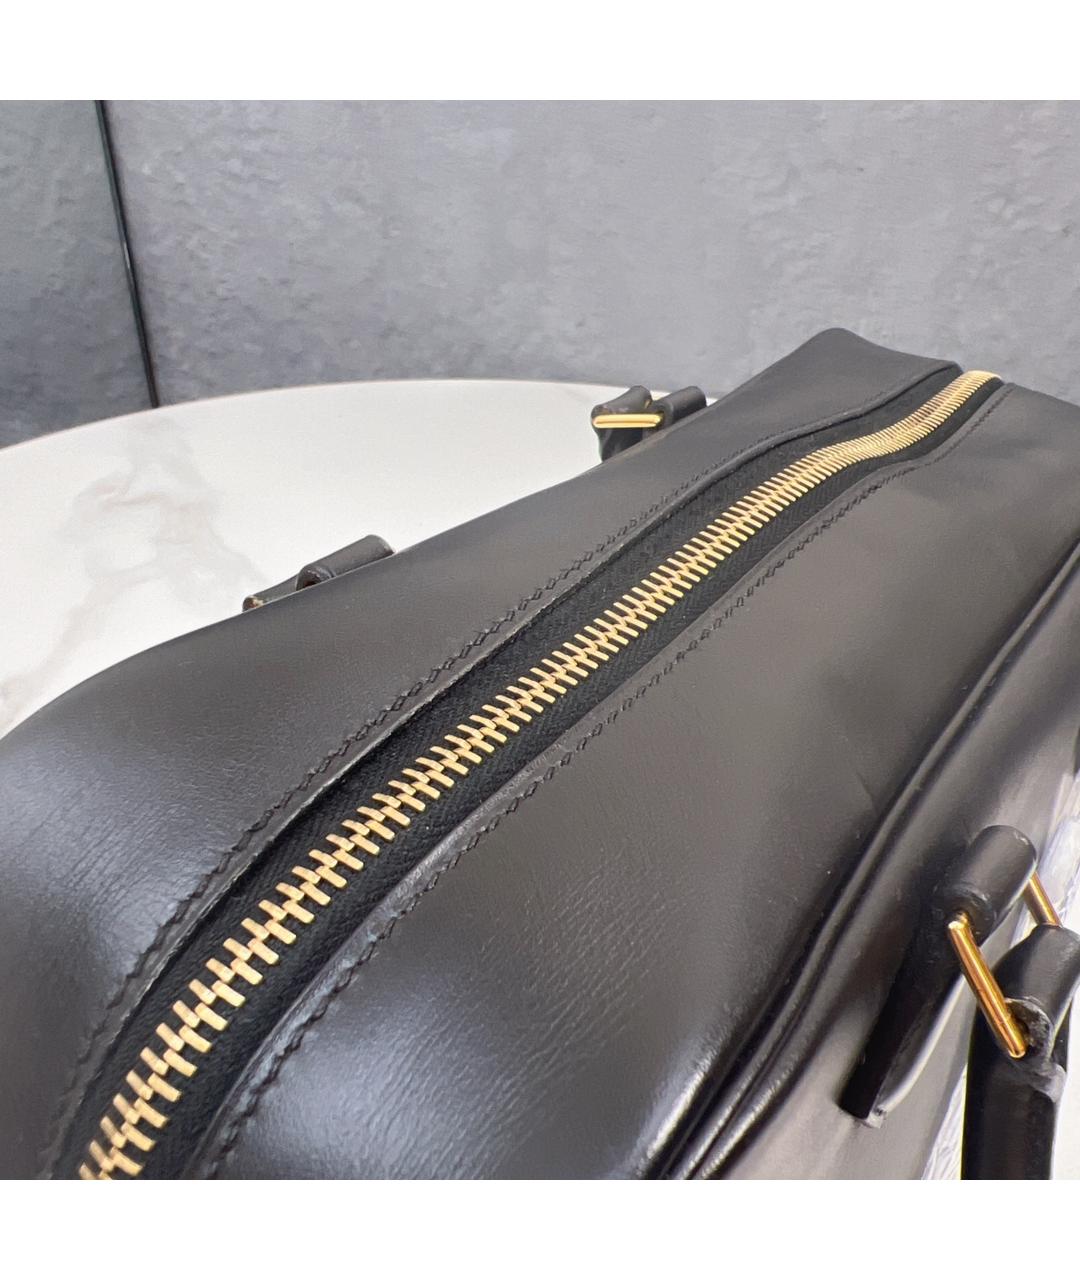 HERMES PRE-OWNED Черная кожаная сумка с короткими ручками, фото 9